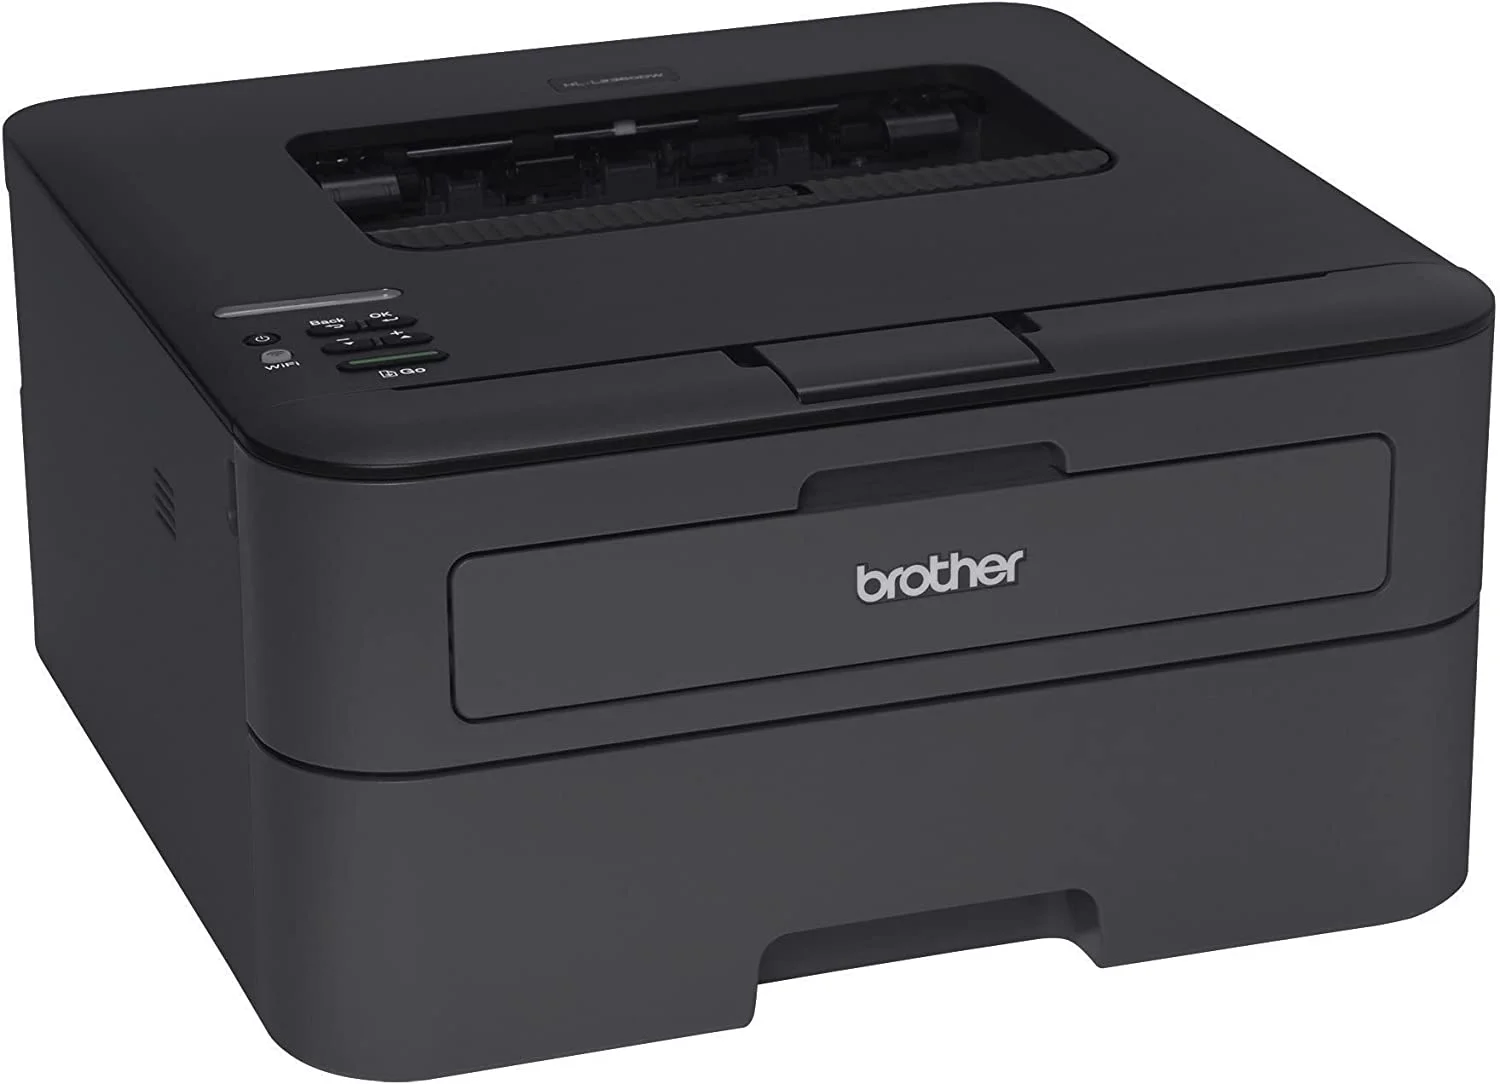 Brother HL-L2340DW Compact Laser Printer